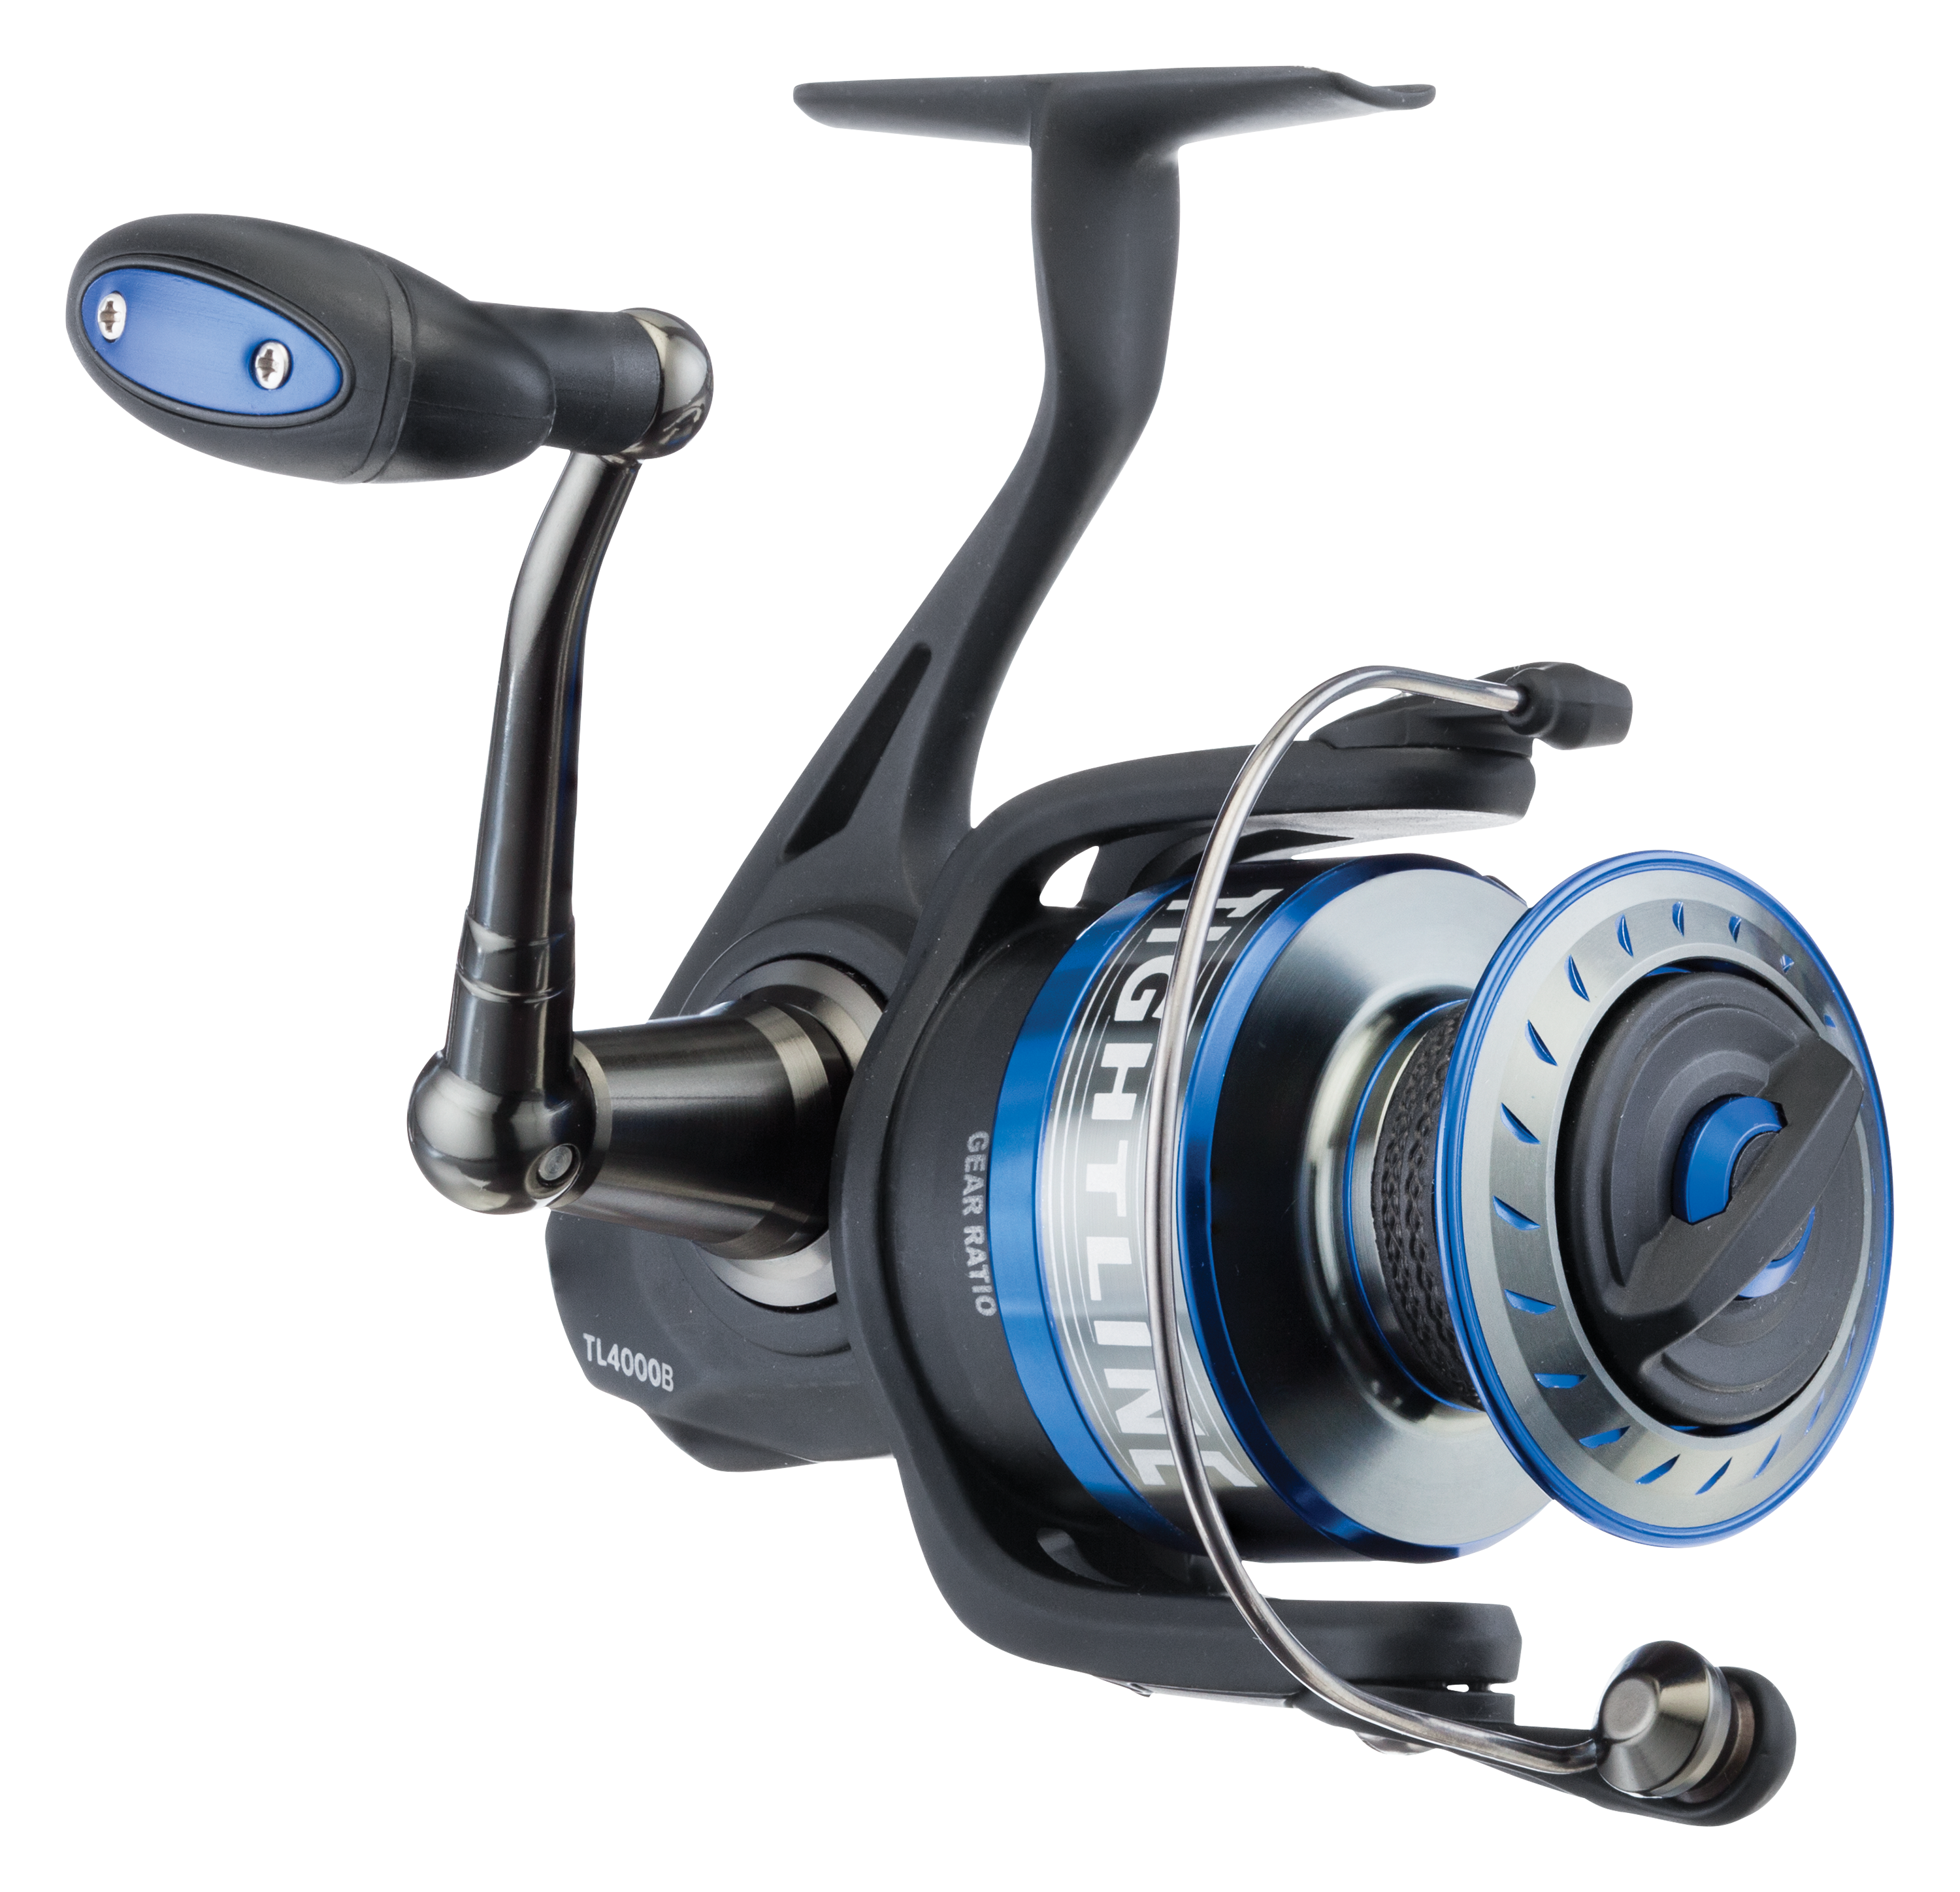 Extra Large Spool Capacity Fishing Spinning Reel Speed Ratio 4.9:1